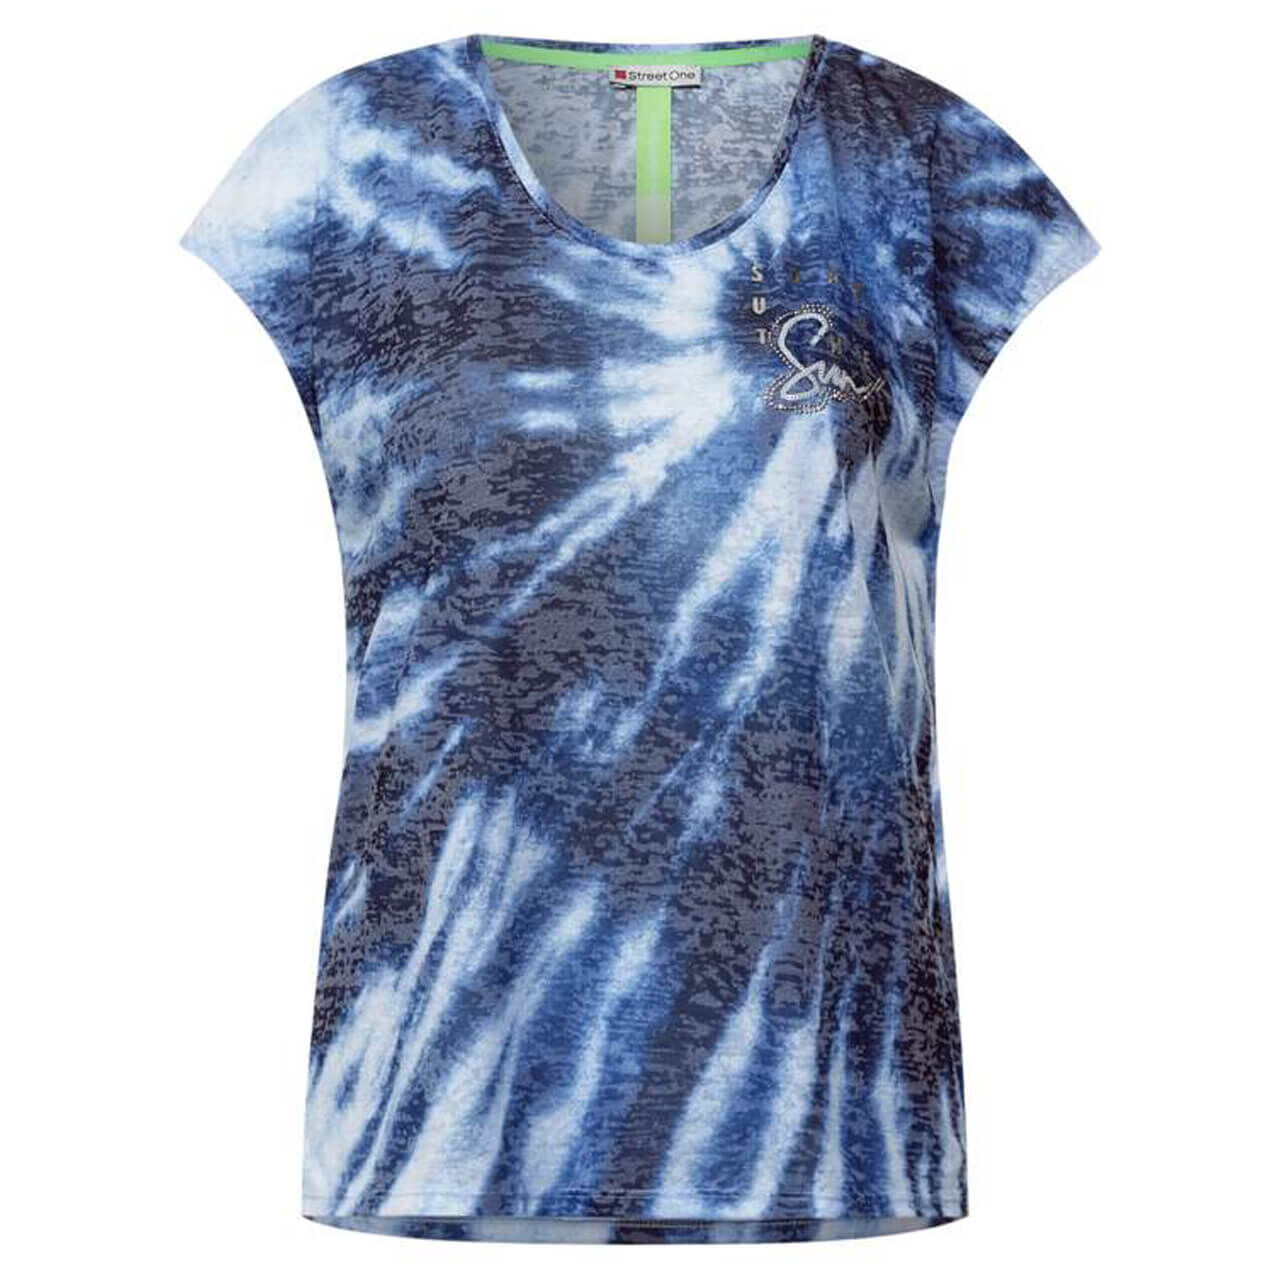 Street One Batic Burn T-Shirt für Damen in Blau mit Print, FarbNr.: 33765